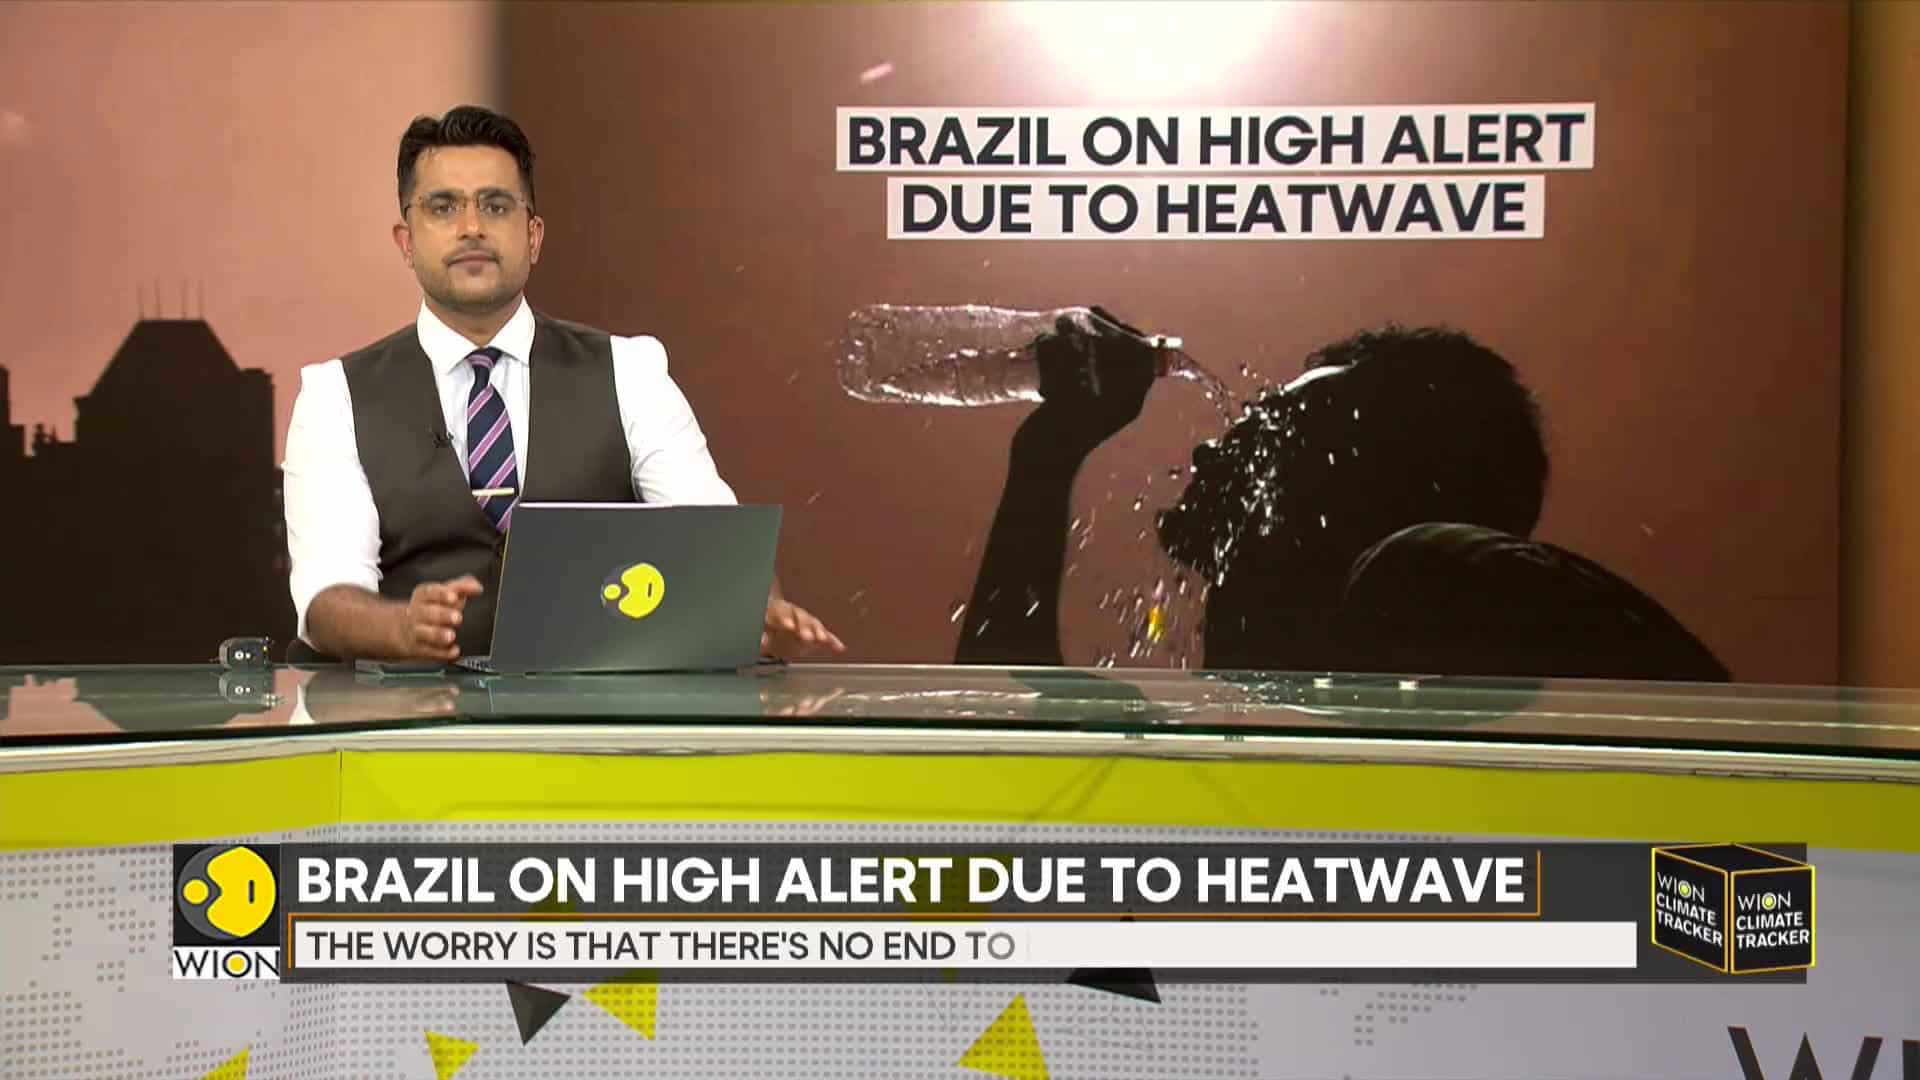 Brazil on high alert due to heatwave